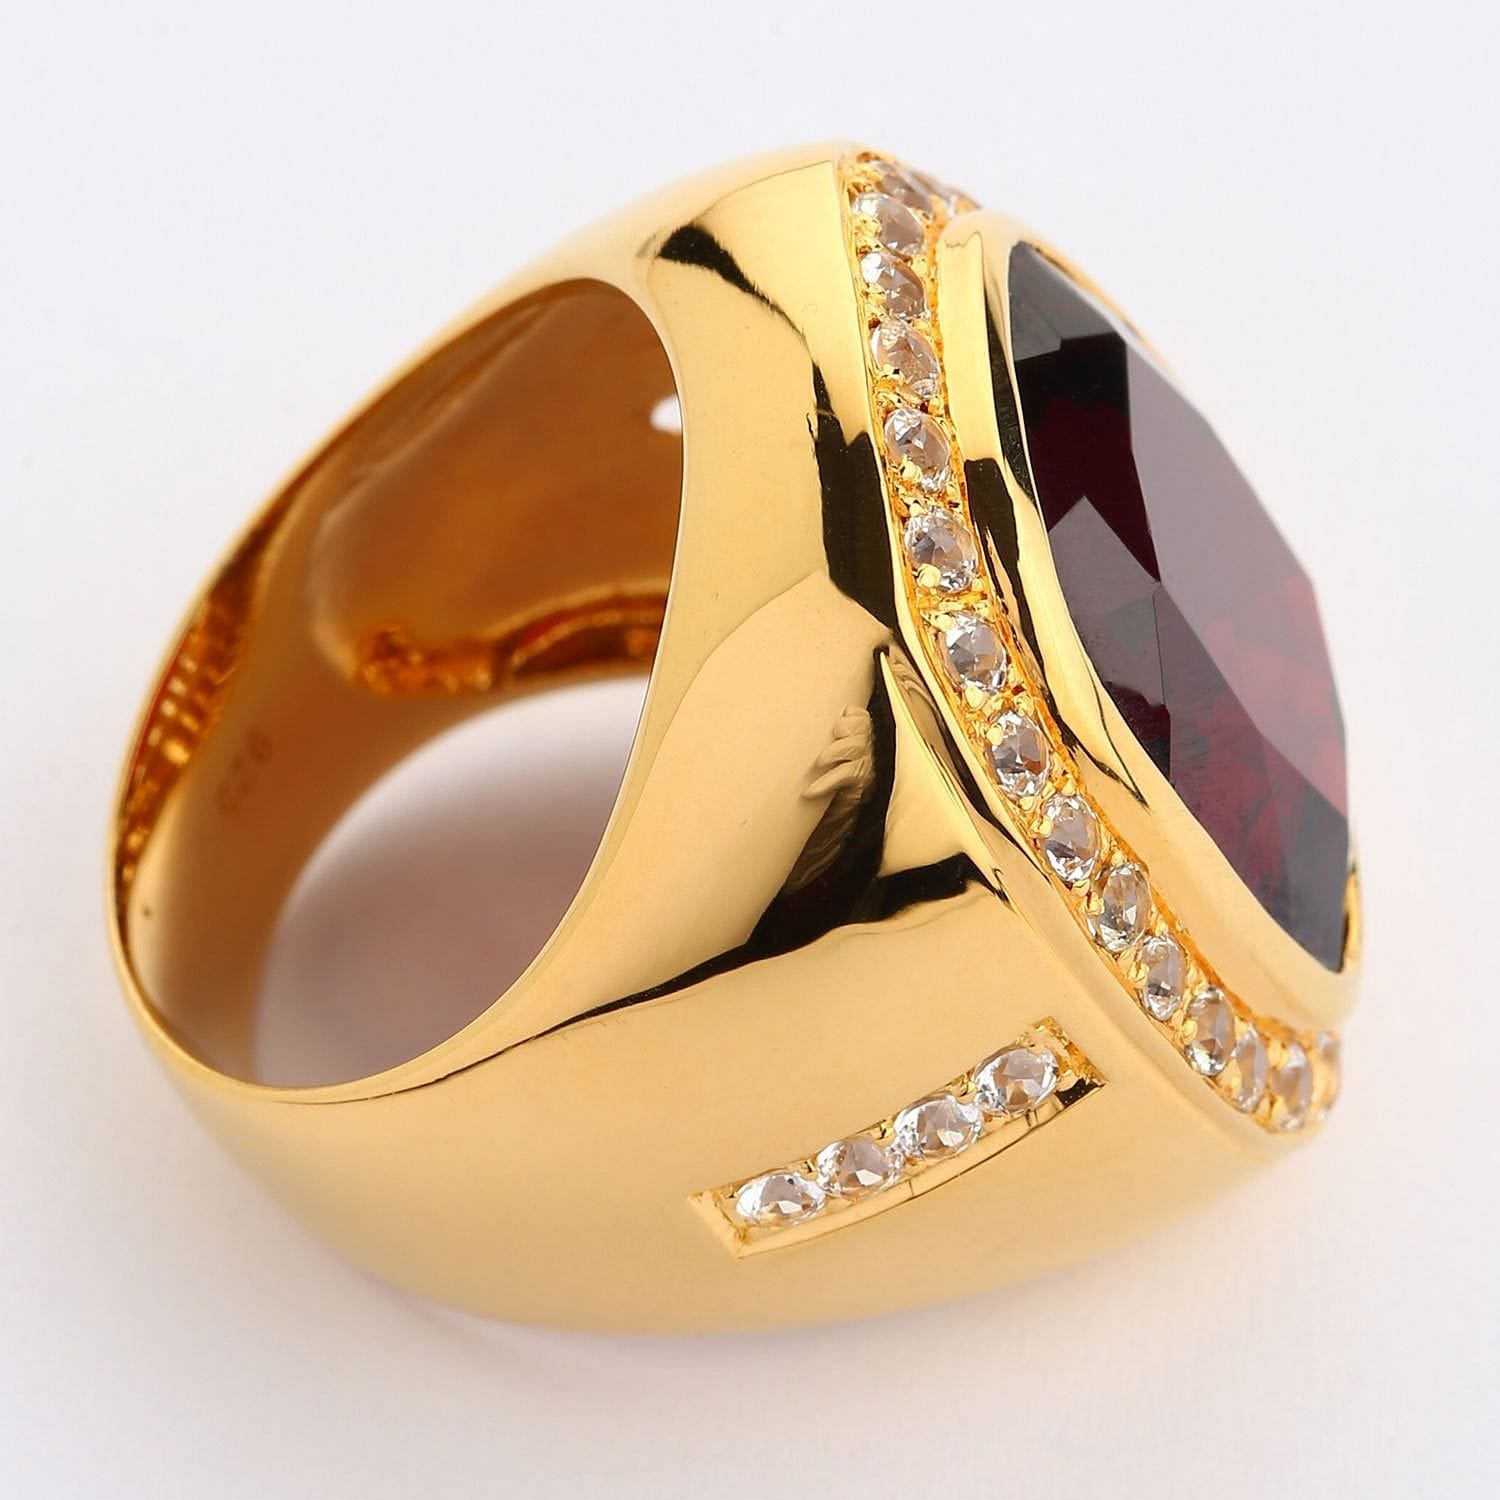 Women Stone Ring - Buy Women Stone Ring online in India